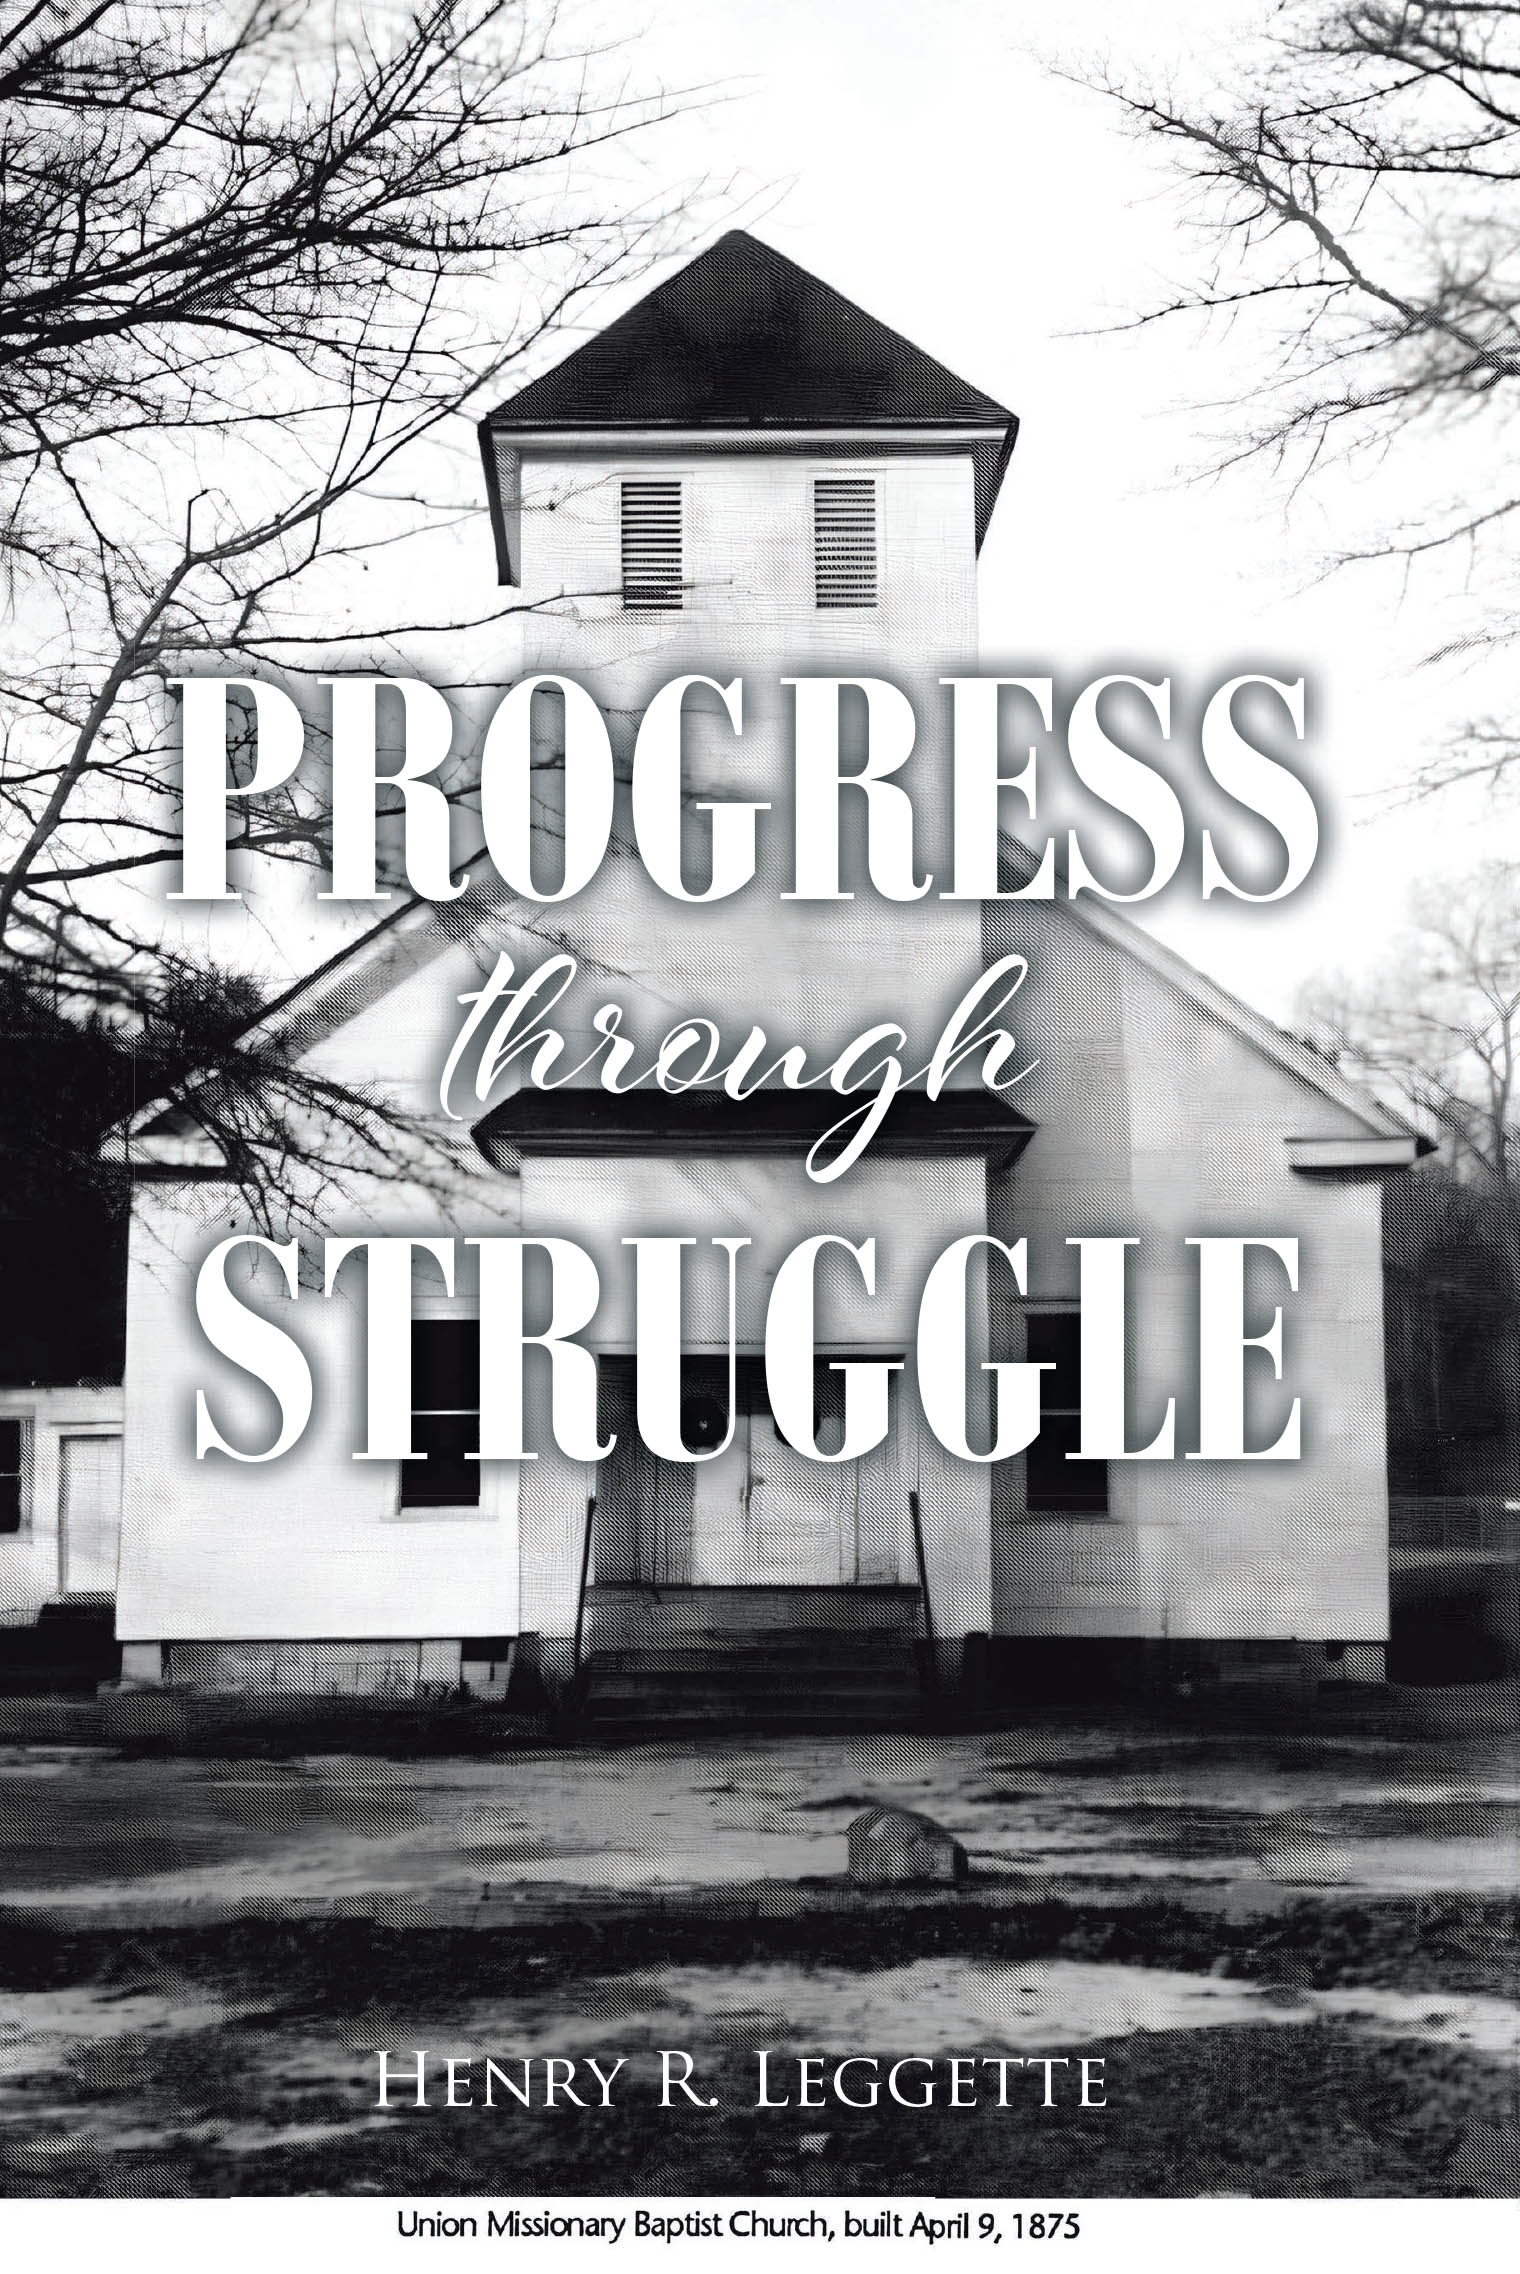 Henry R. Leggette’s Newly Released "Progress Through Struggle" is an Inspiring and Motivational Memoir